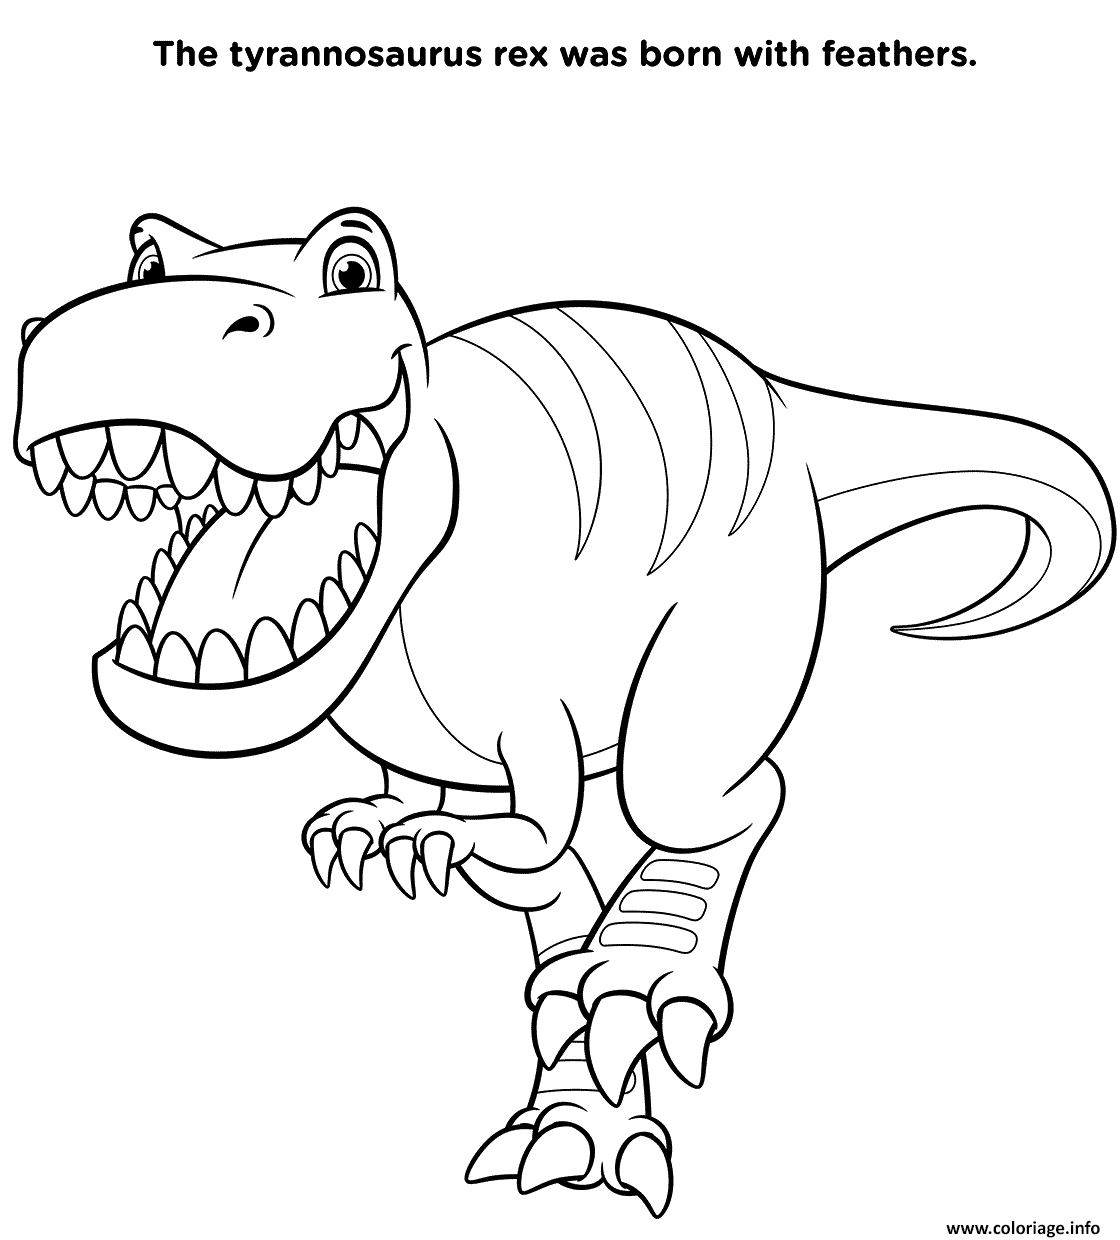 Coloriage Tyrannosaurus Rex For Kids - JeColorie.com